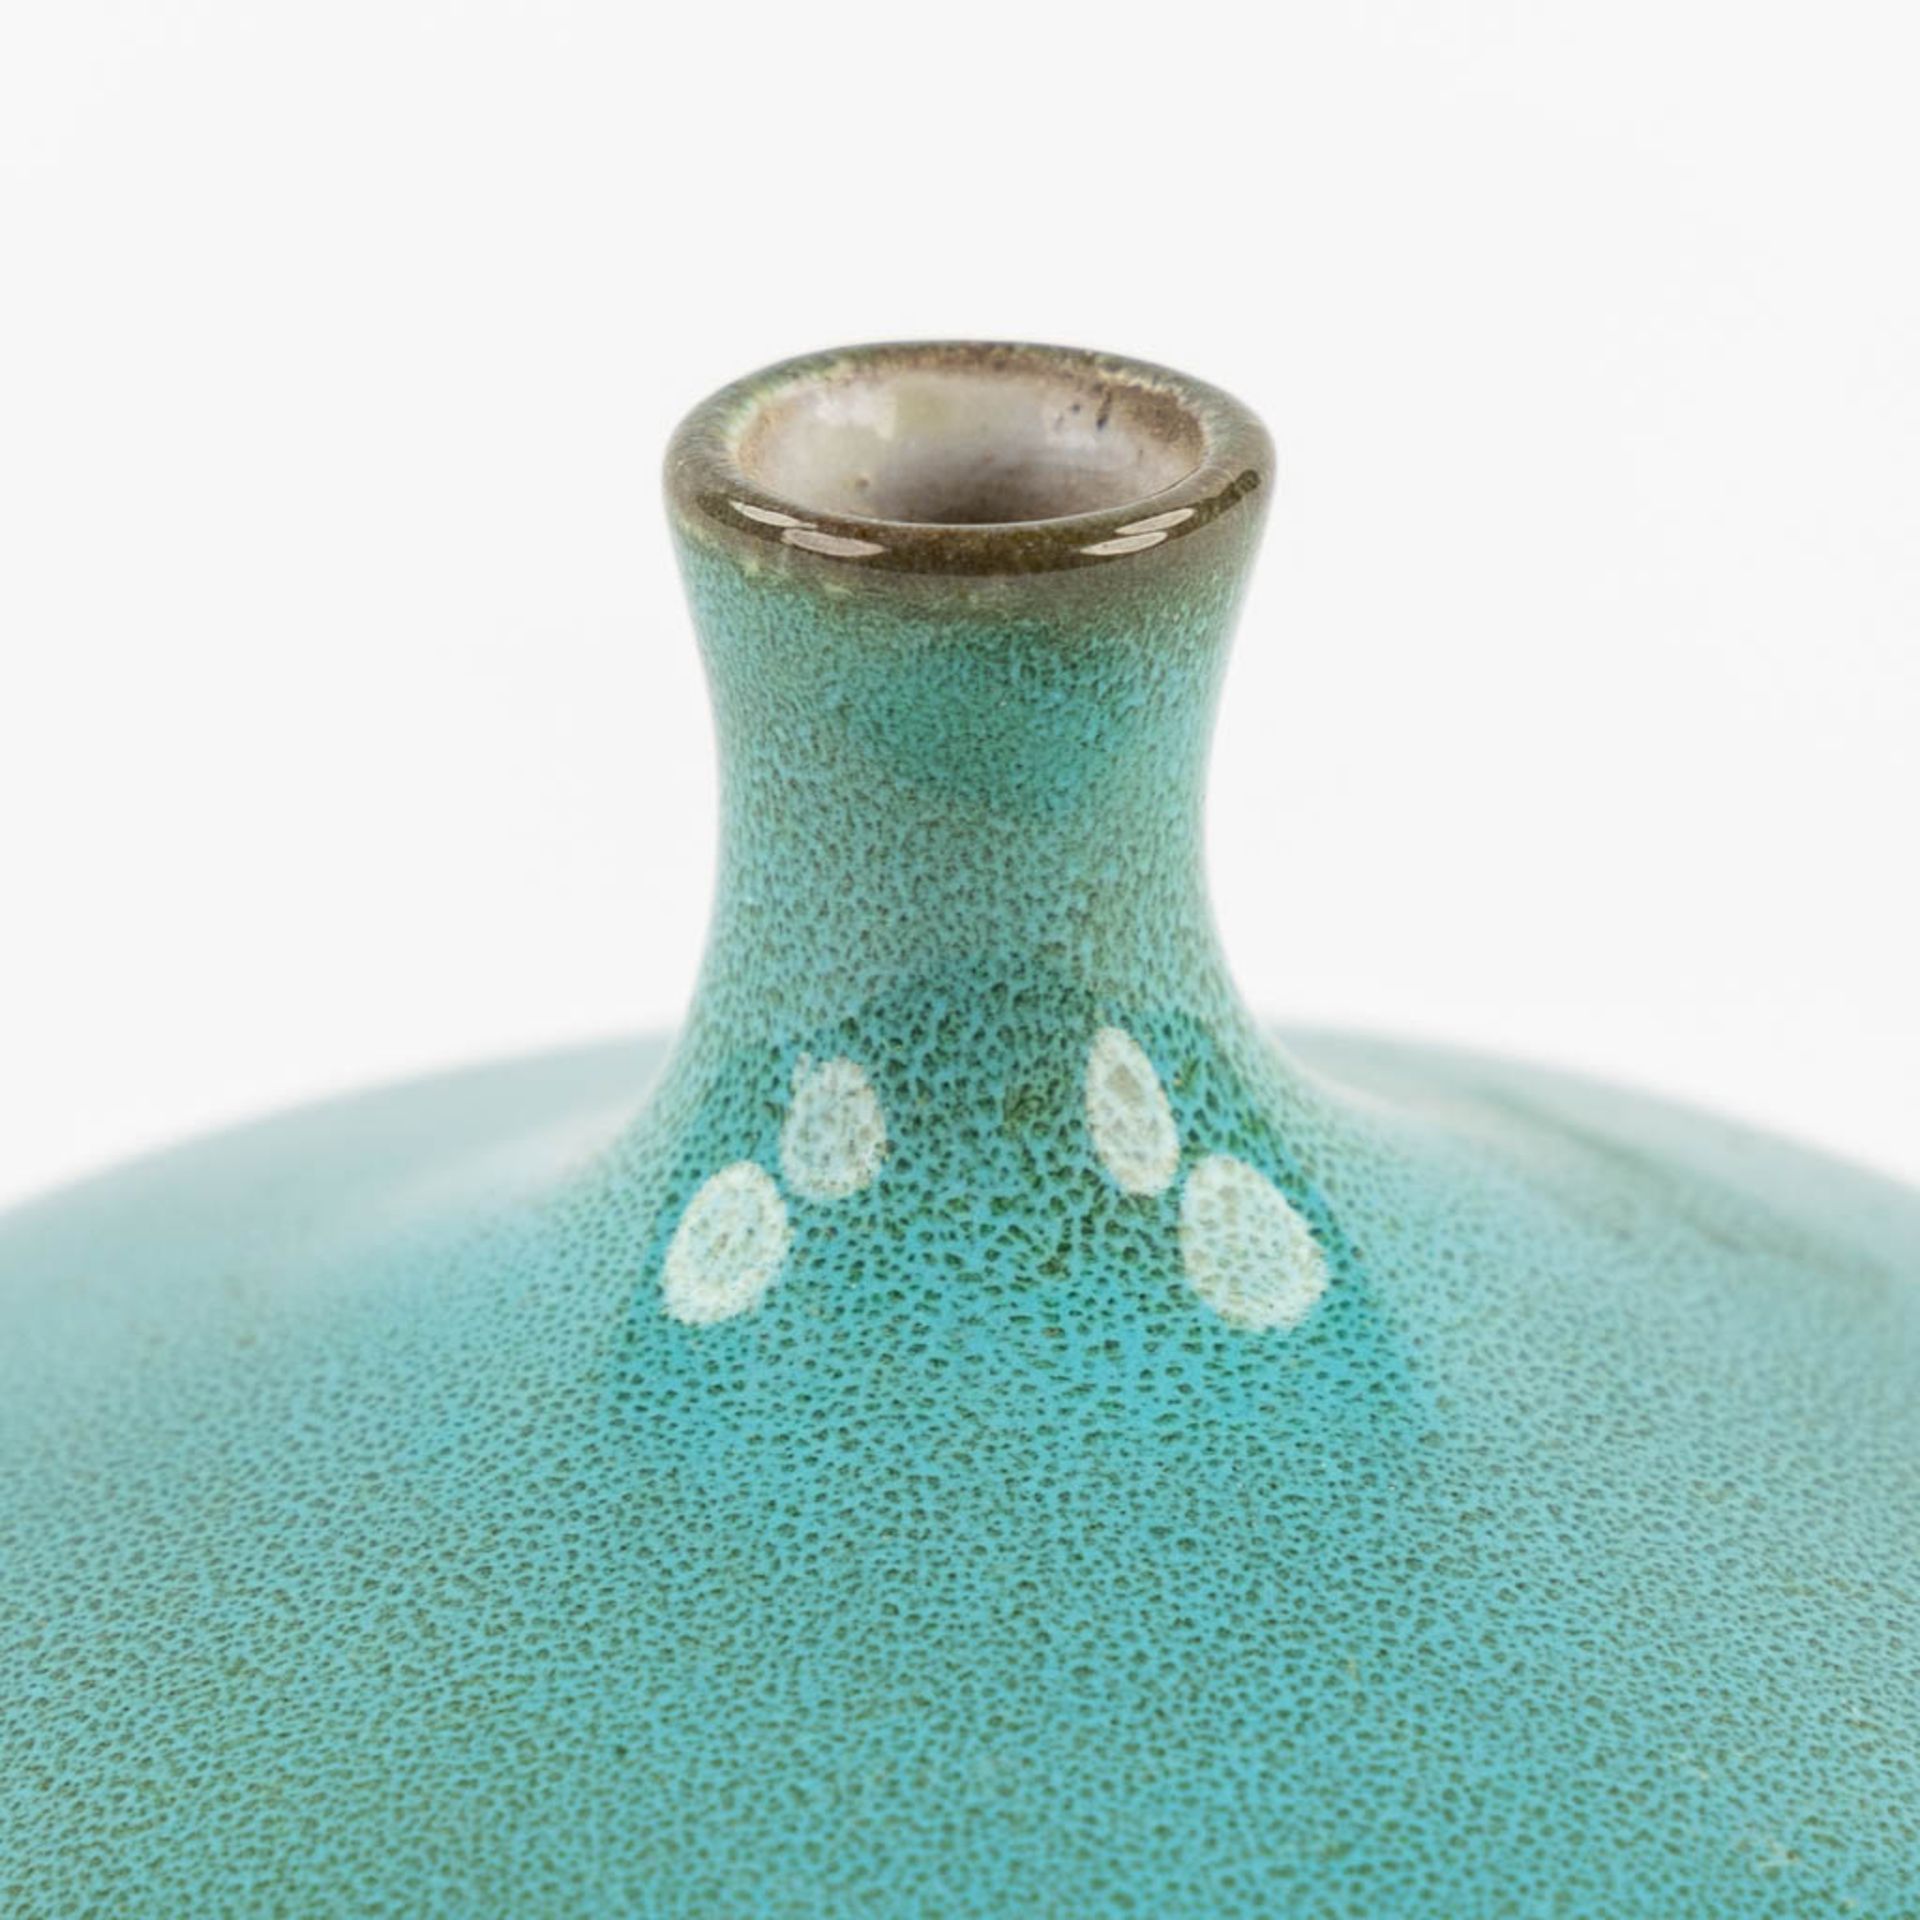 Jacques & Dani RUELLAND (XX-XXI) 'Vase' glazed ceramics. (H:8 x D:10 cm) - Bild 10 aus 10